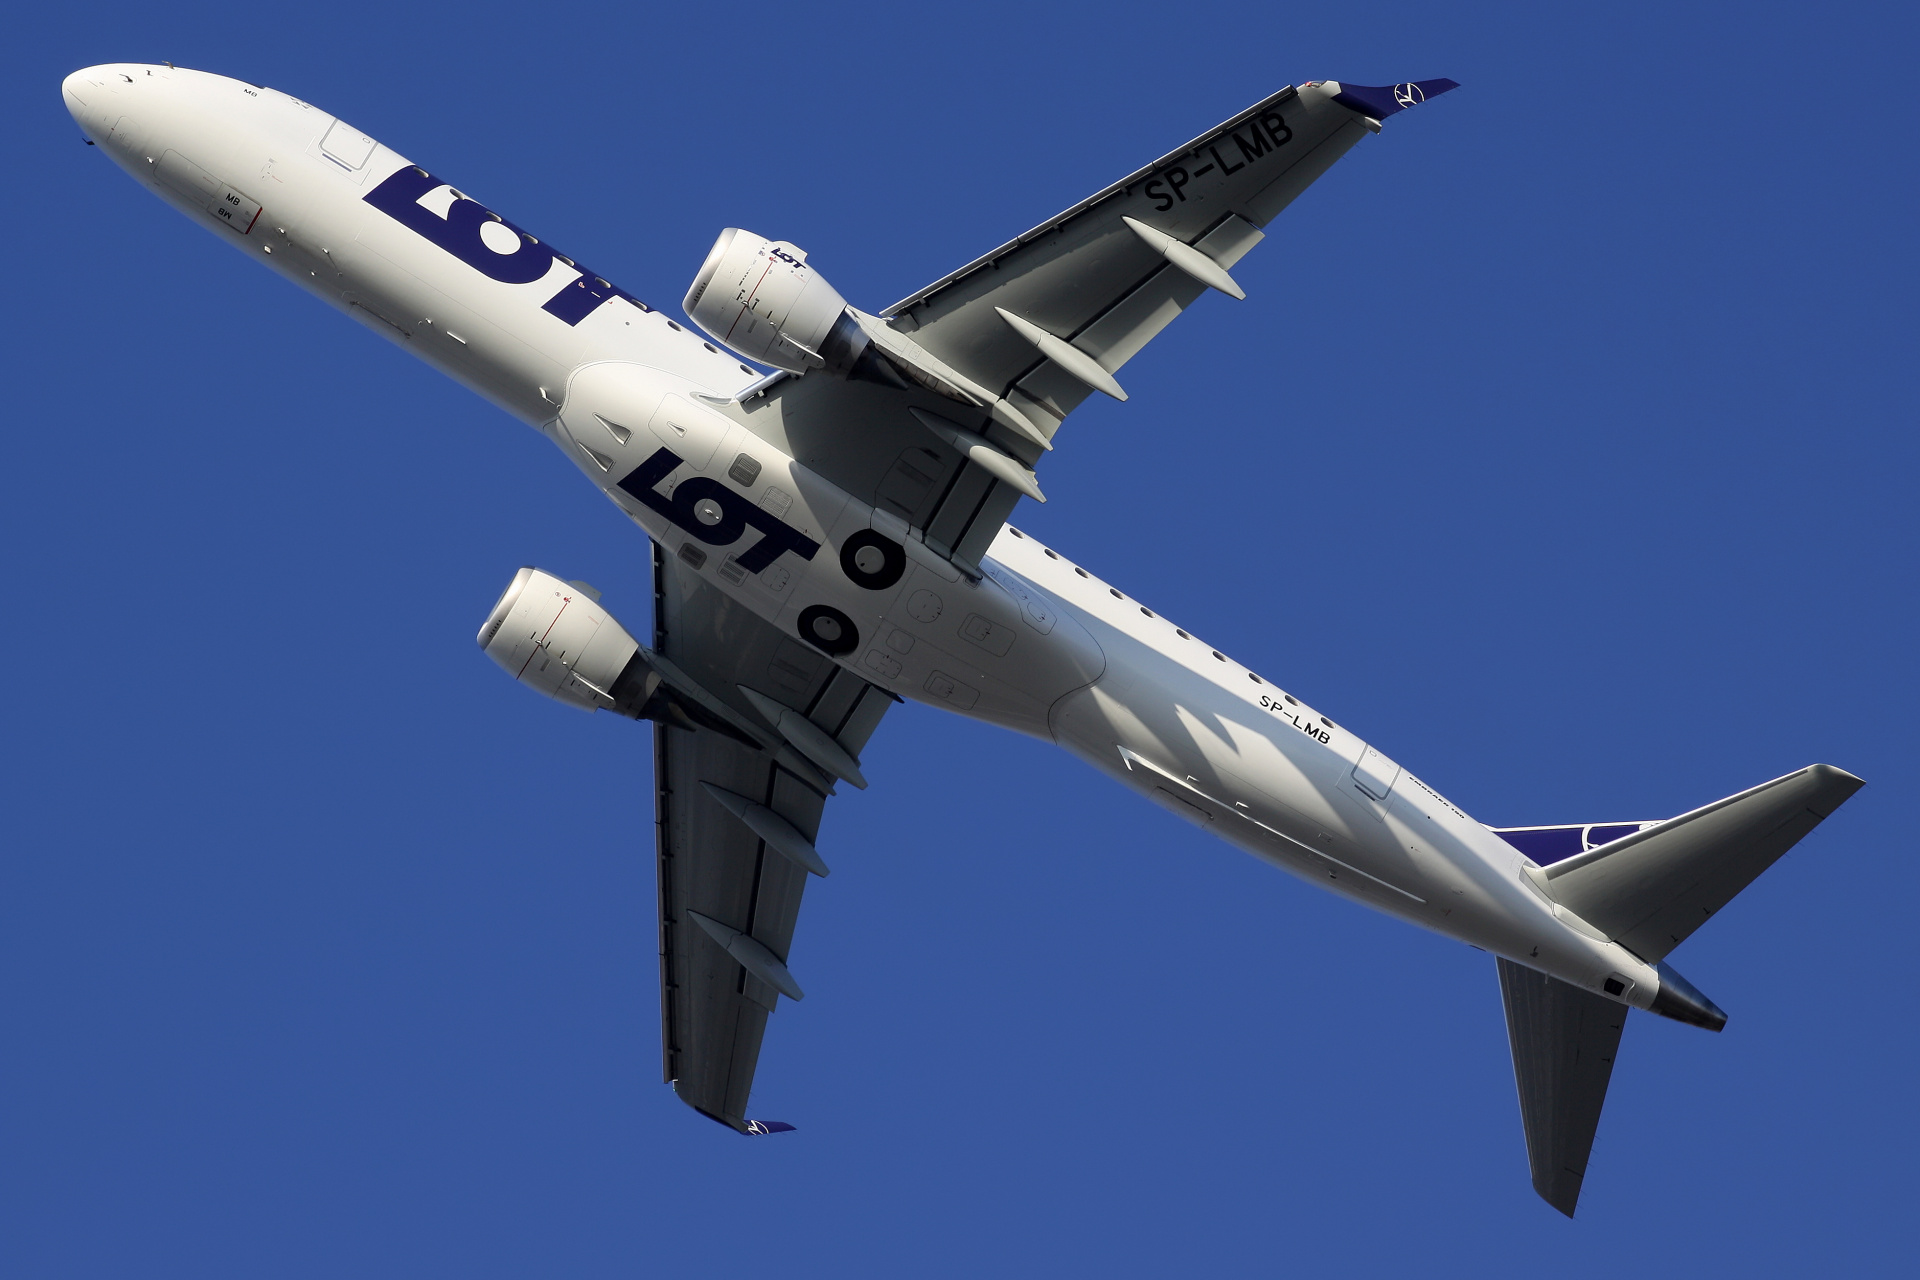 SP-LMB (Aircraft » EPWA Spotting » Embraer E190 » LOT Polish Airlines)